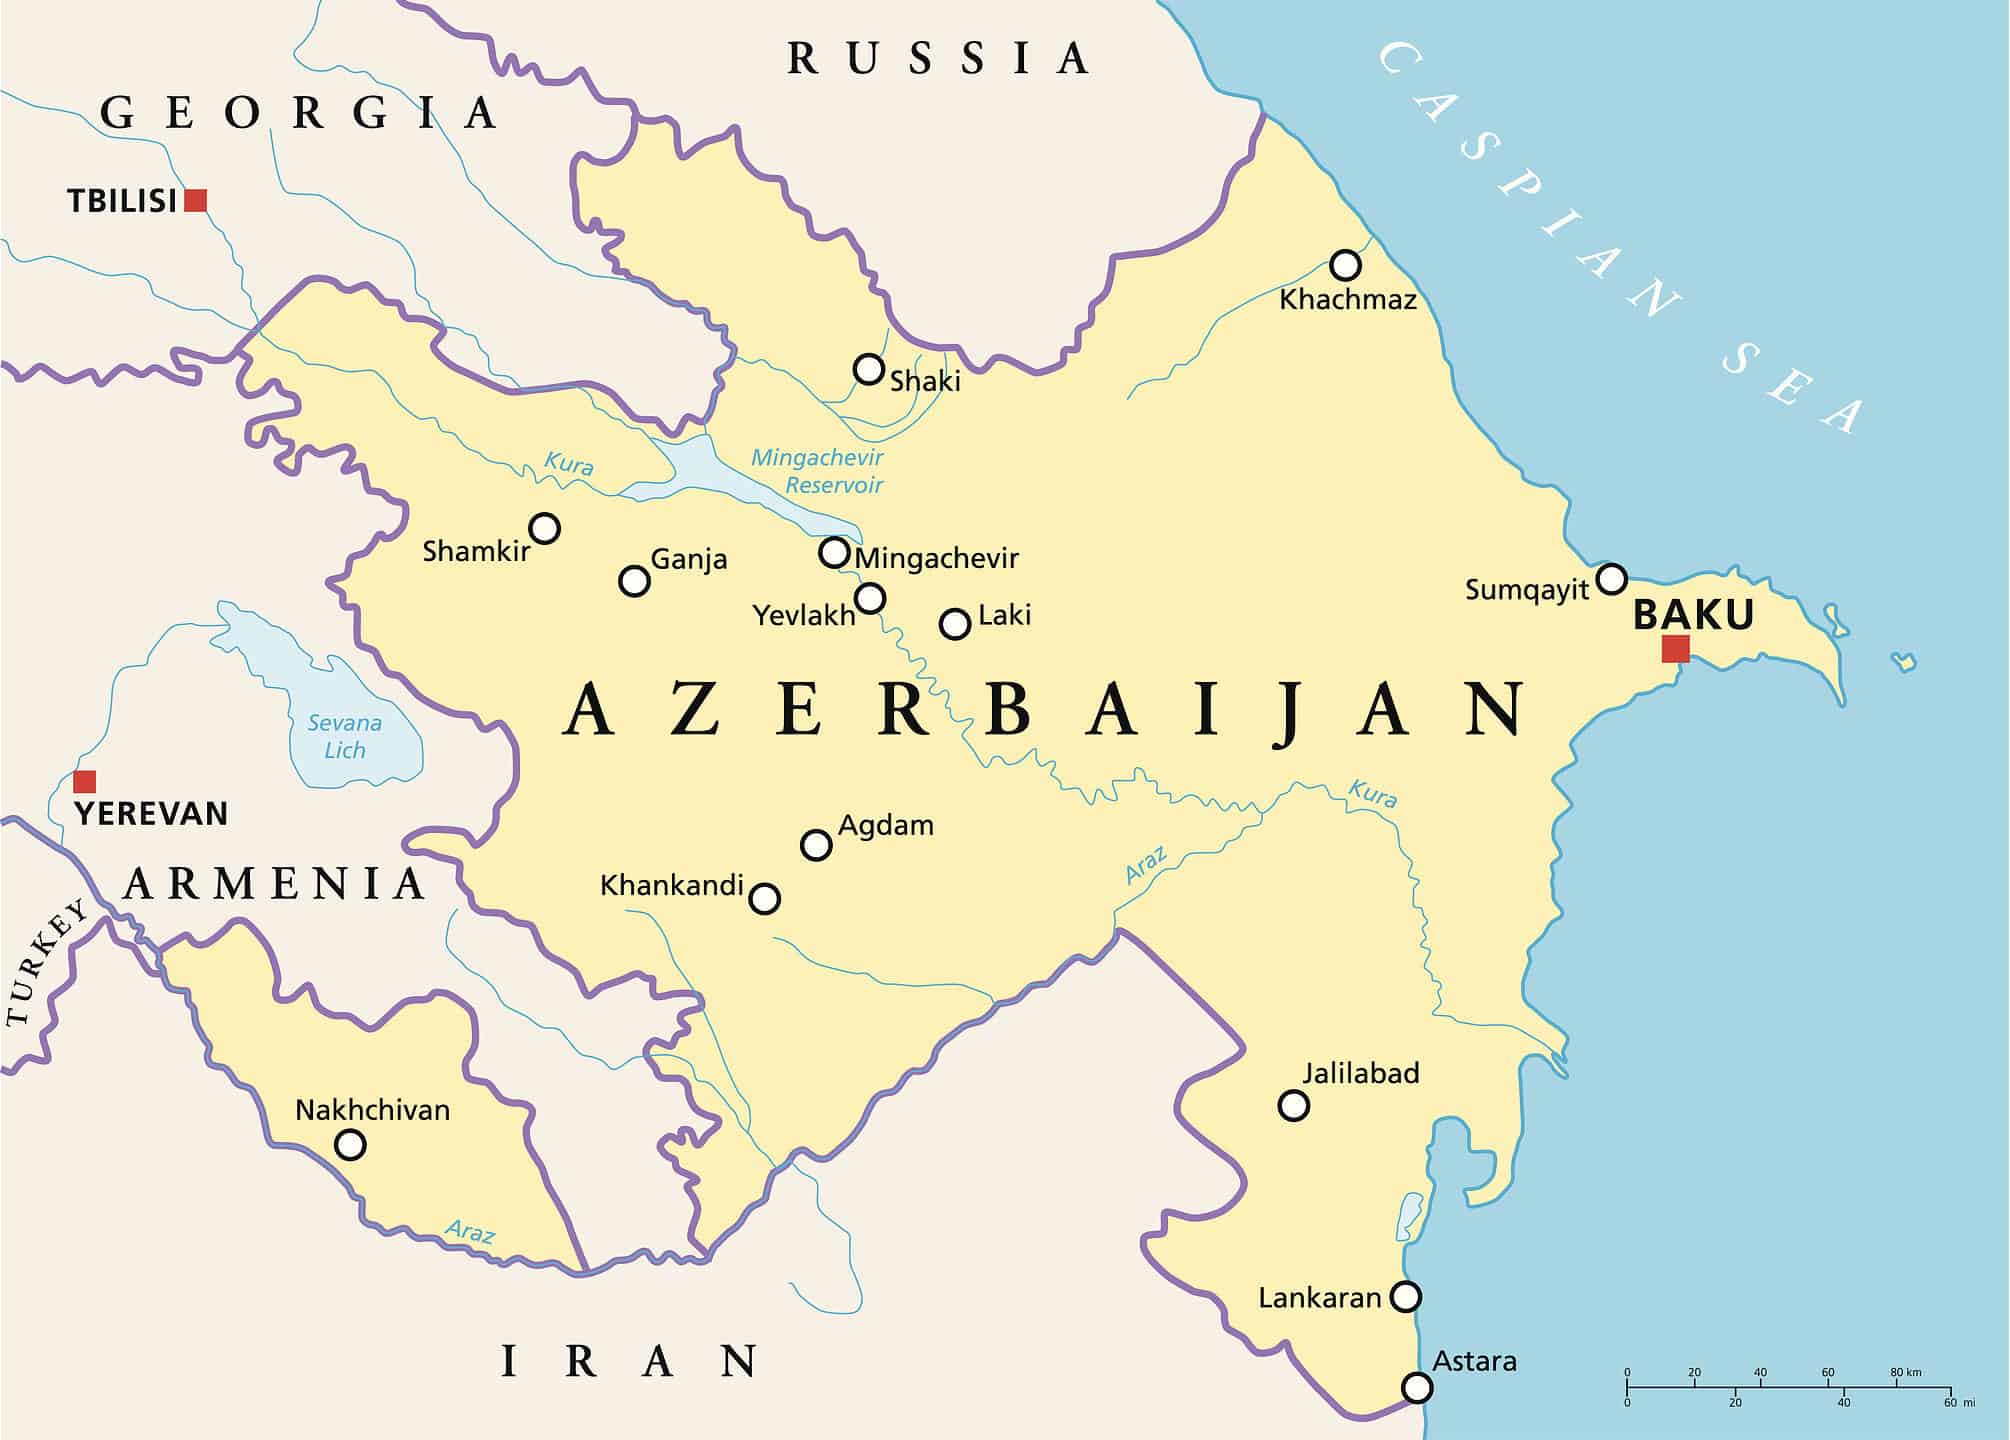 Map of Azerbaijan and surrounding areas.